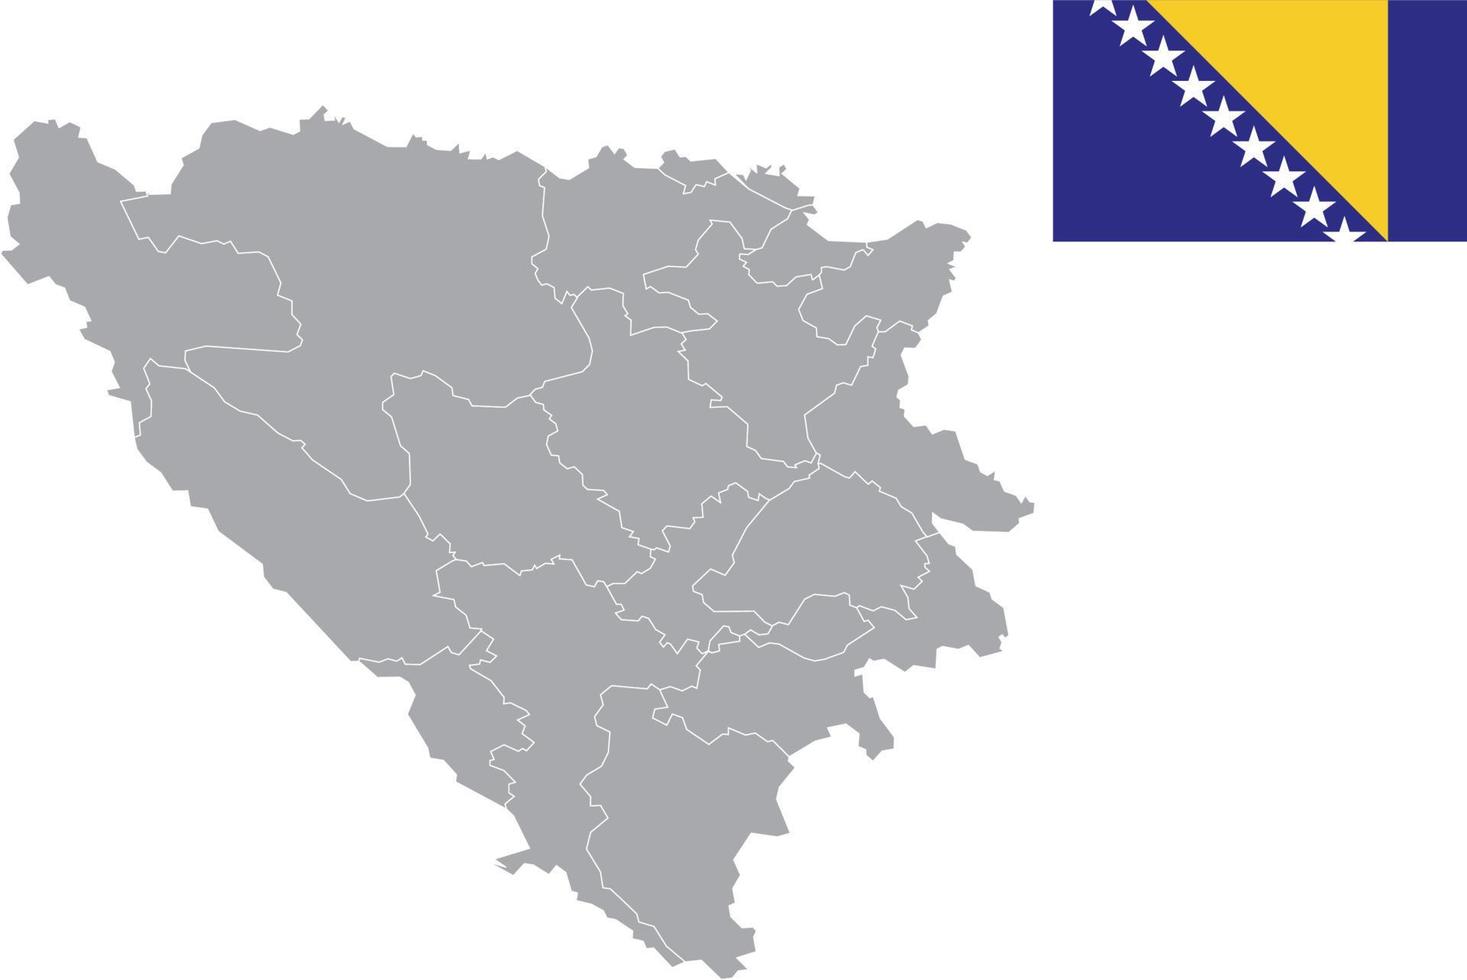 carte de bosnie-herzégovine. drapeau bosnie-herzégovine. icône plate symbole illustration vectorielle vecteur